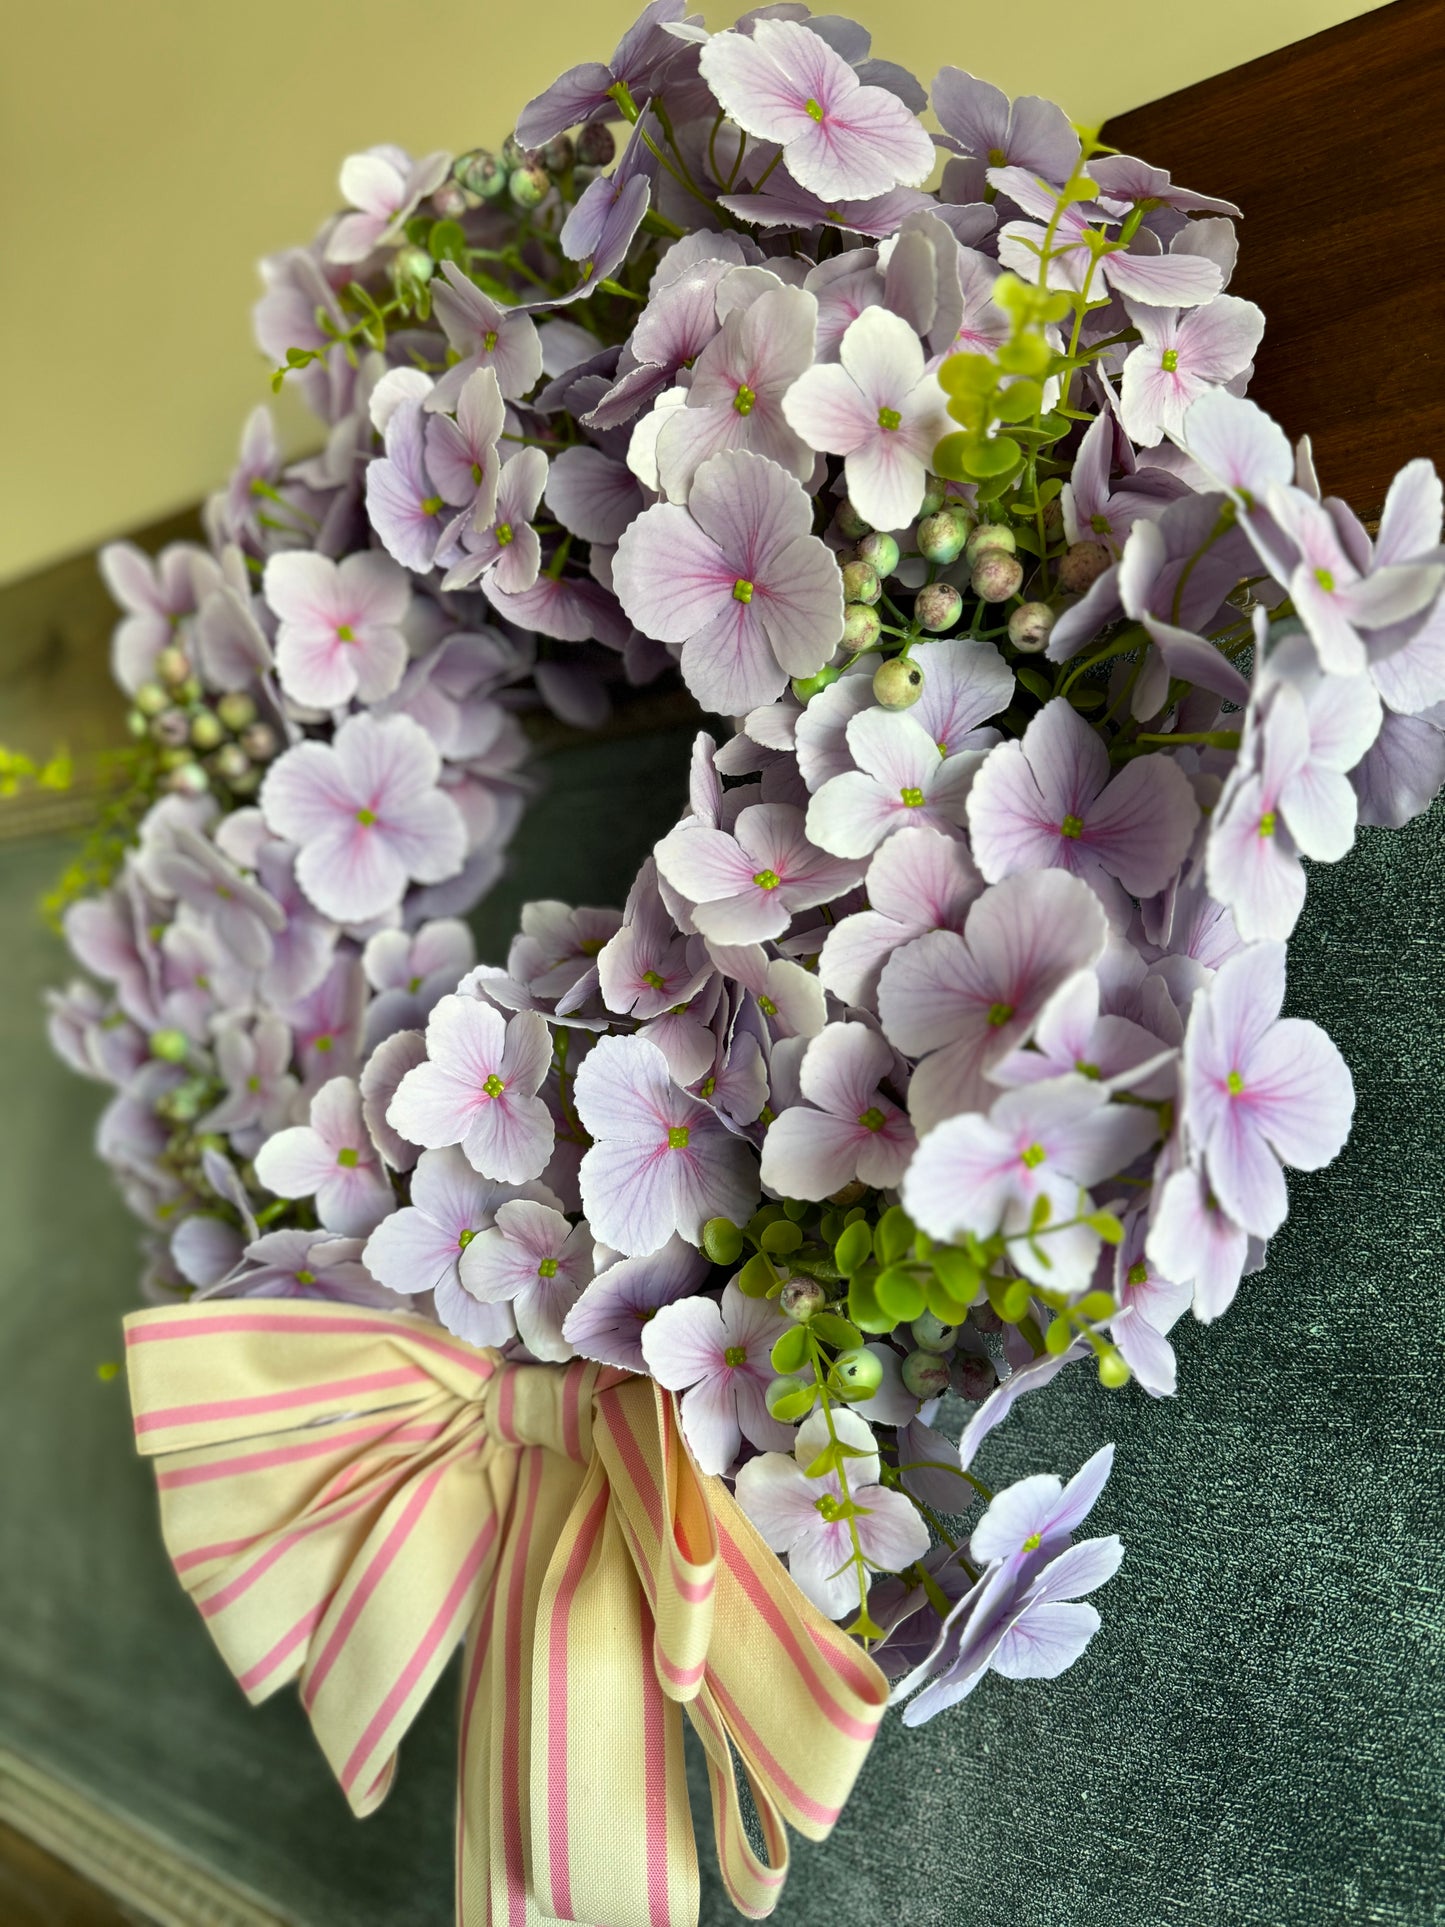 Purple hydrangea wreath